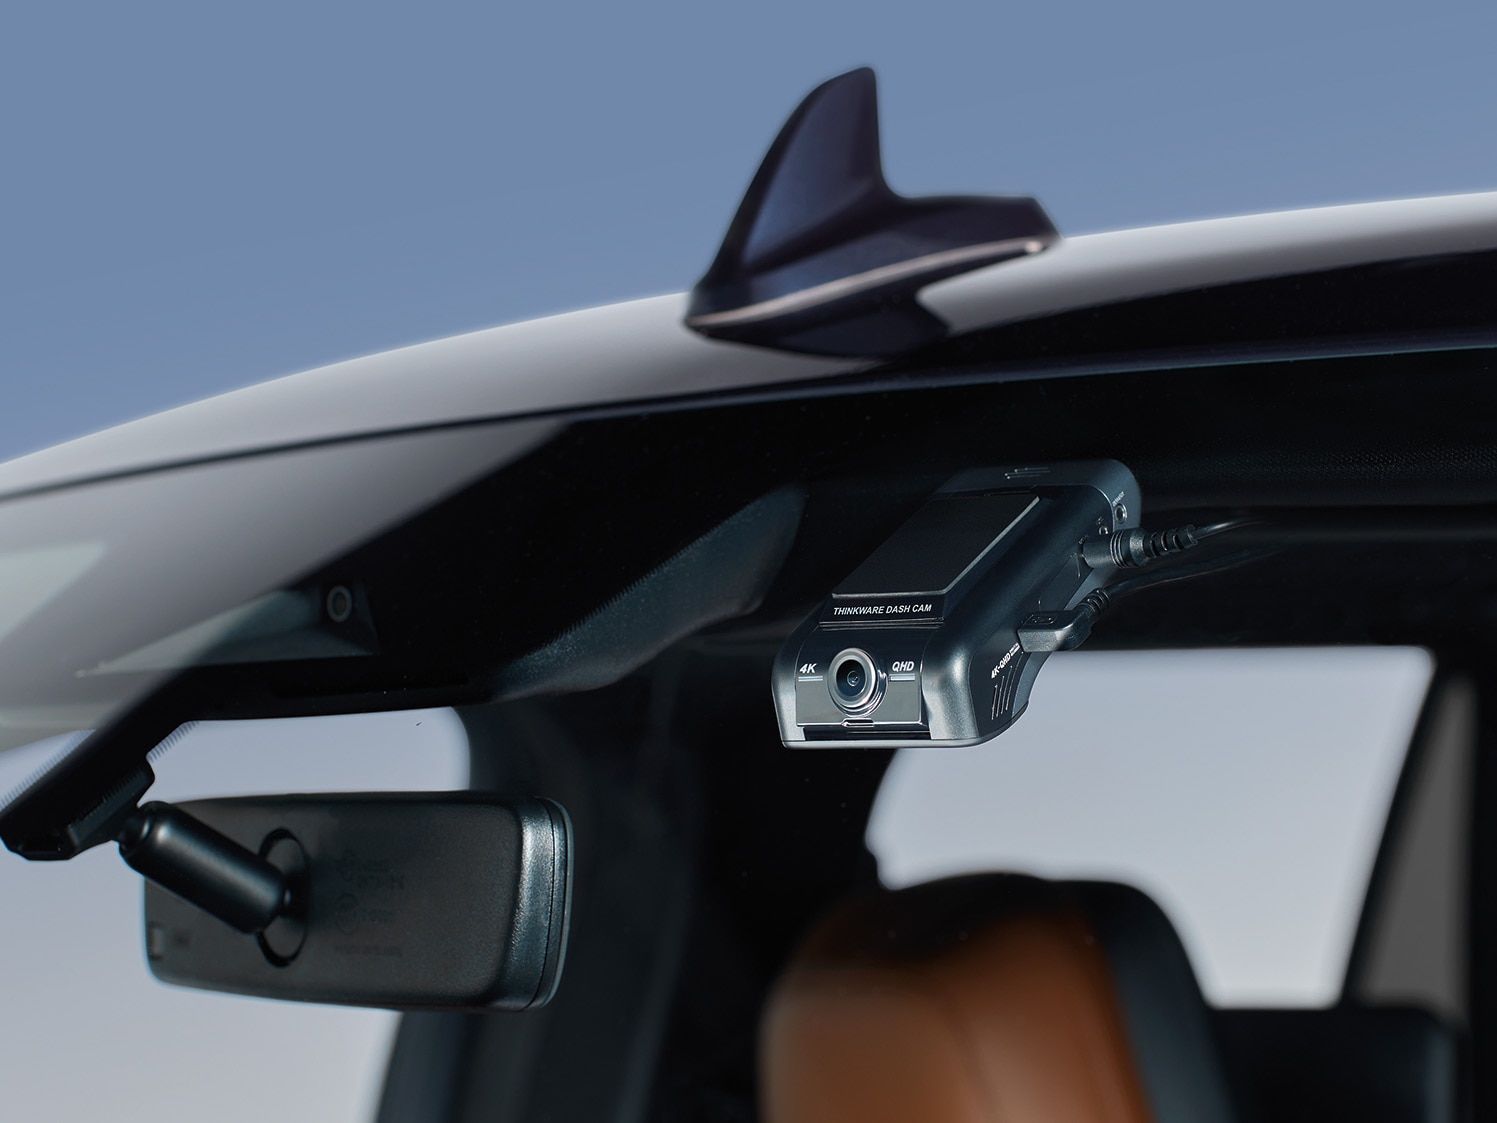 Genuine Ford Dashcam Bundle - Front Facing Dashcam And Rear Facing